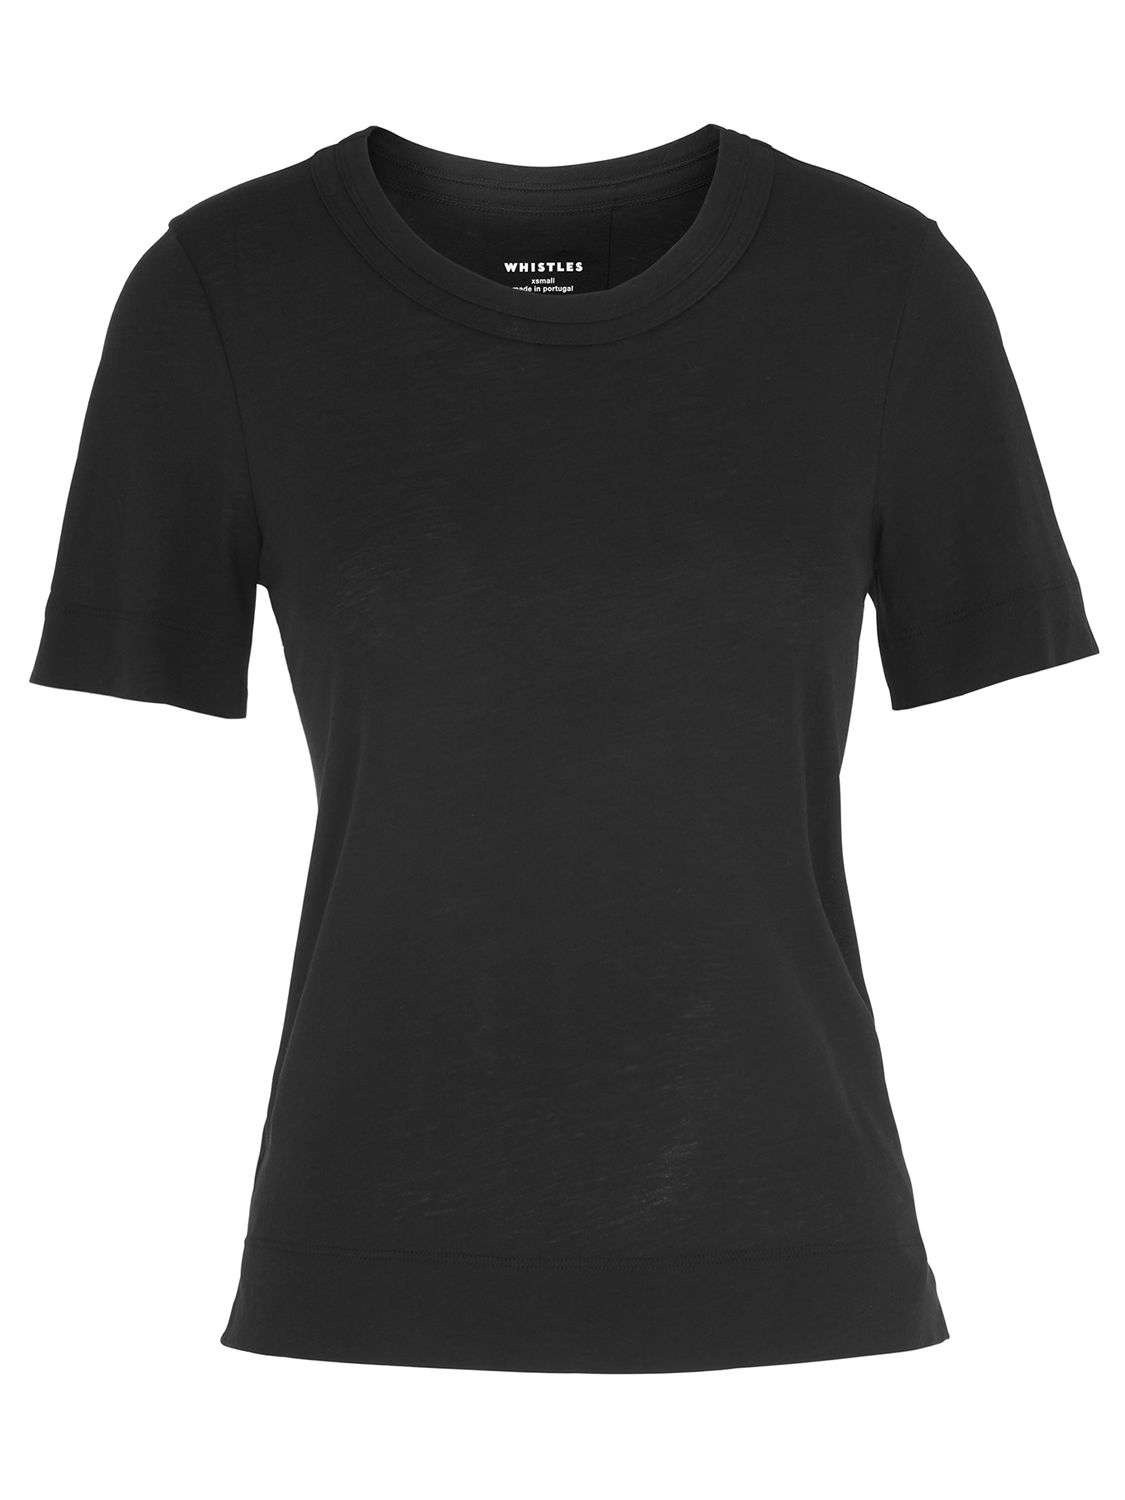 Whistles Rosa Double Trim T-Shirt, Black at John Lewis & Partners